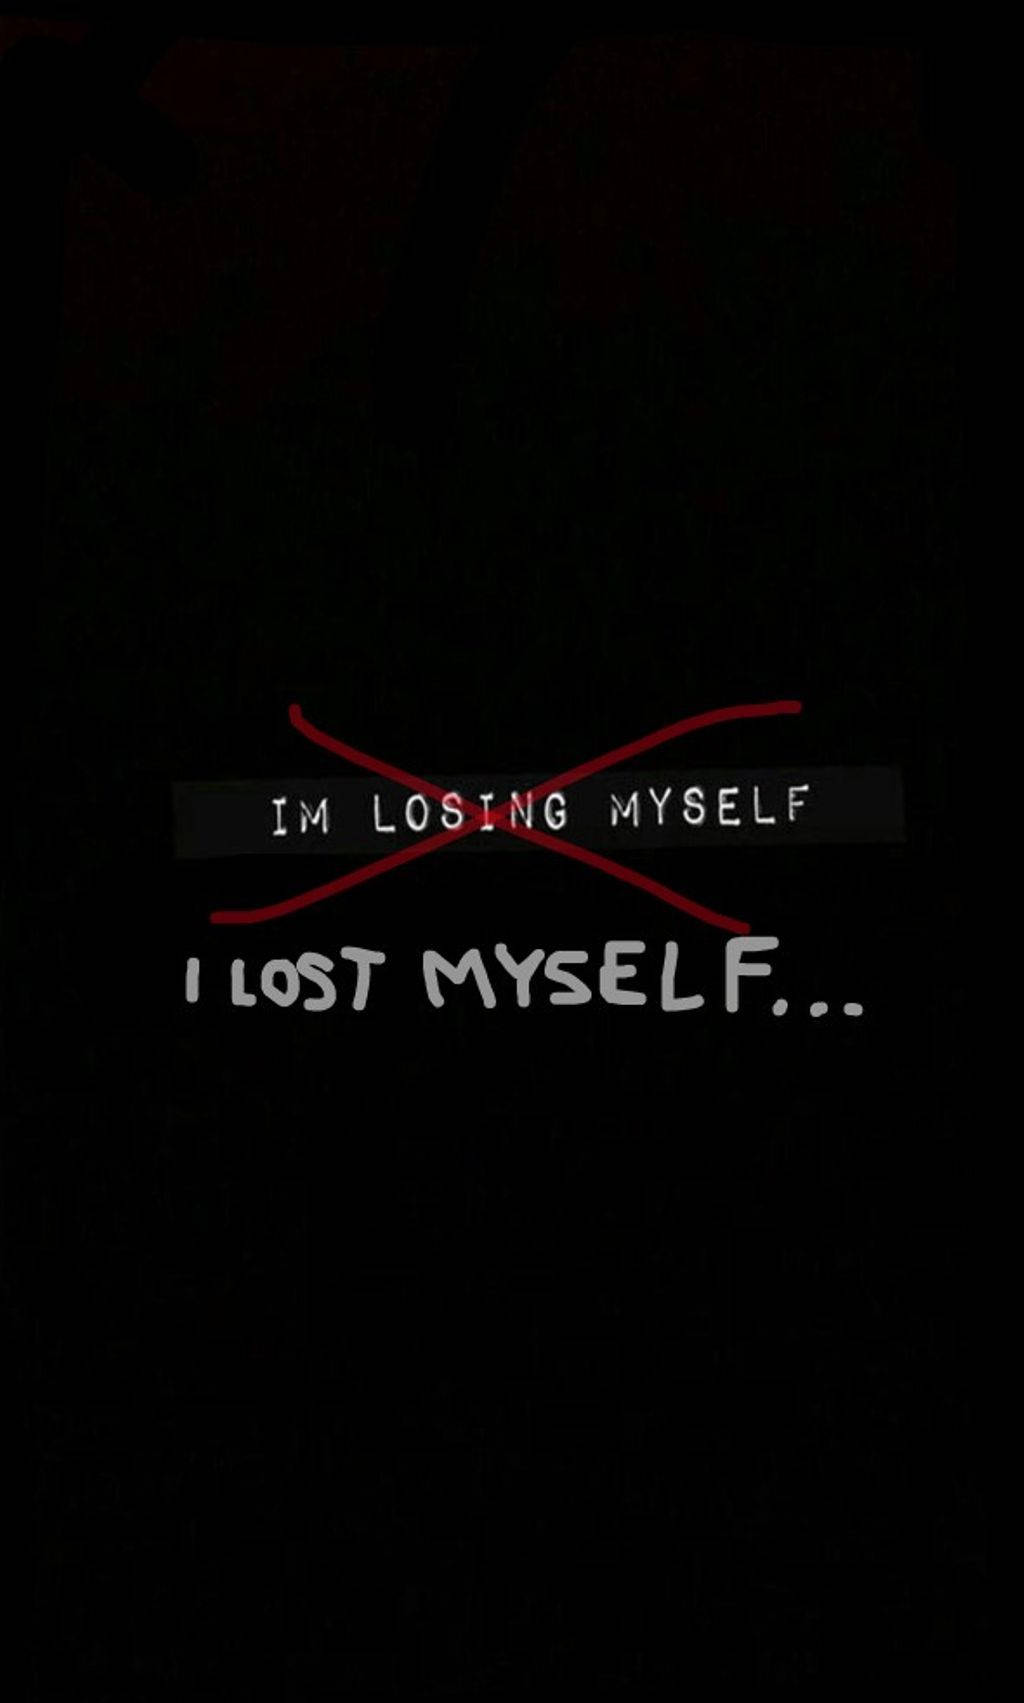 I Lost Myself Sad Depressing Background